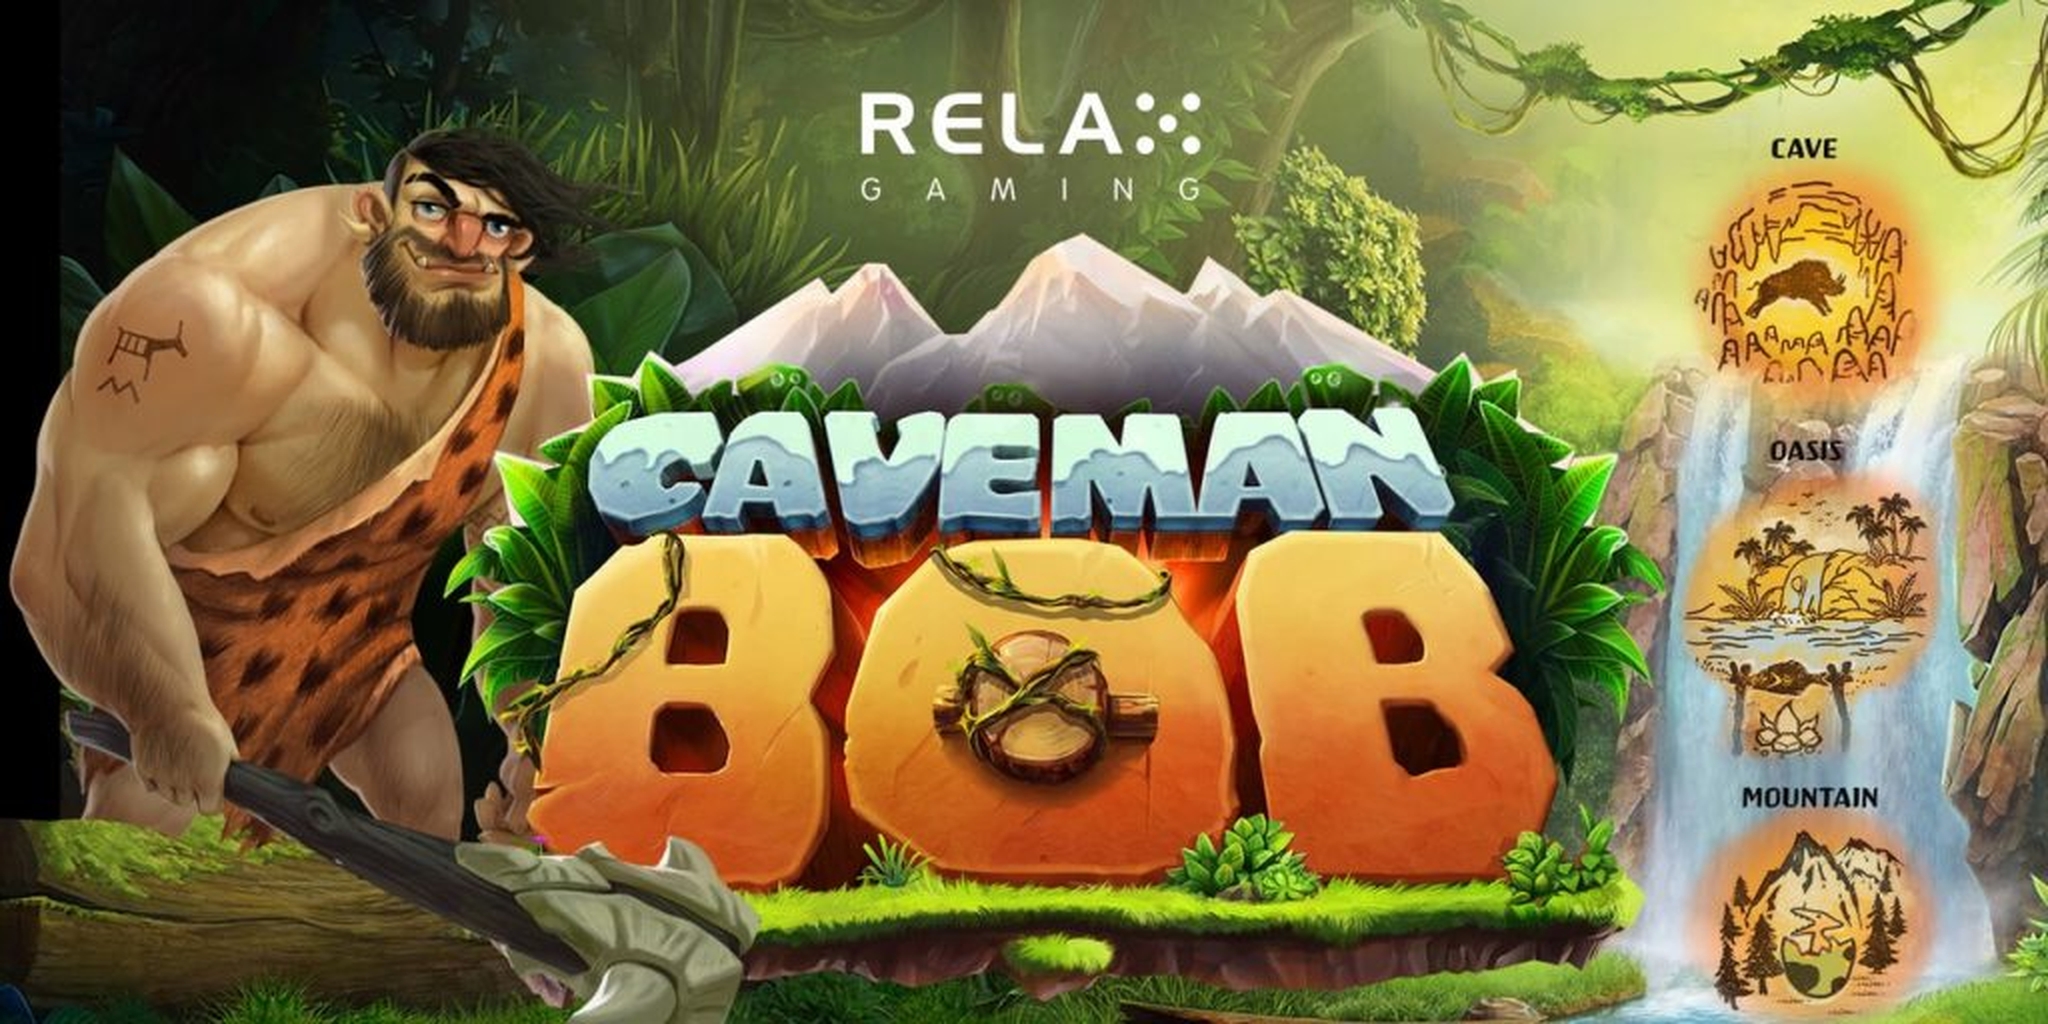 Caveman Bob demo